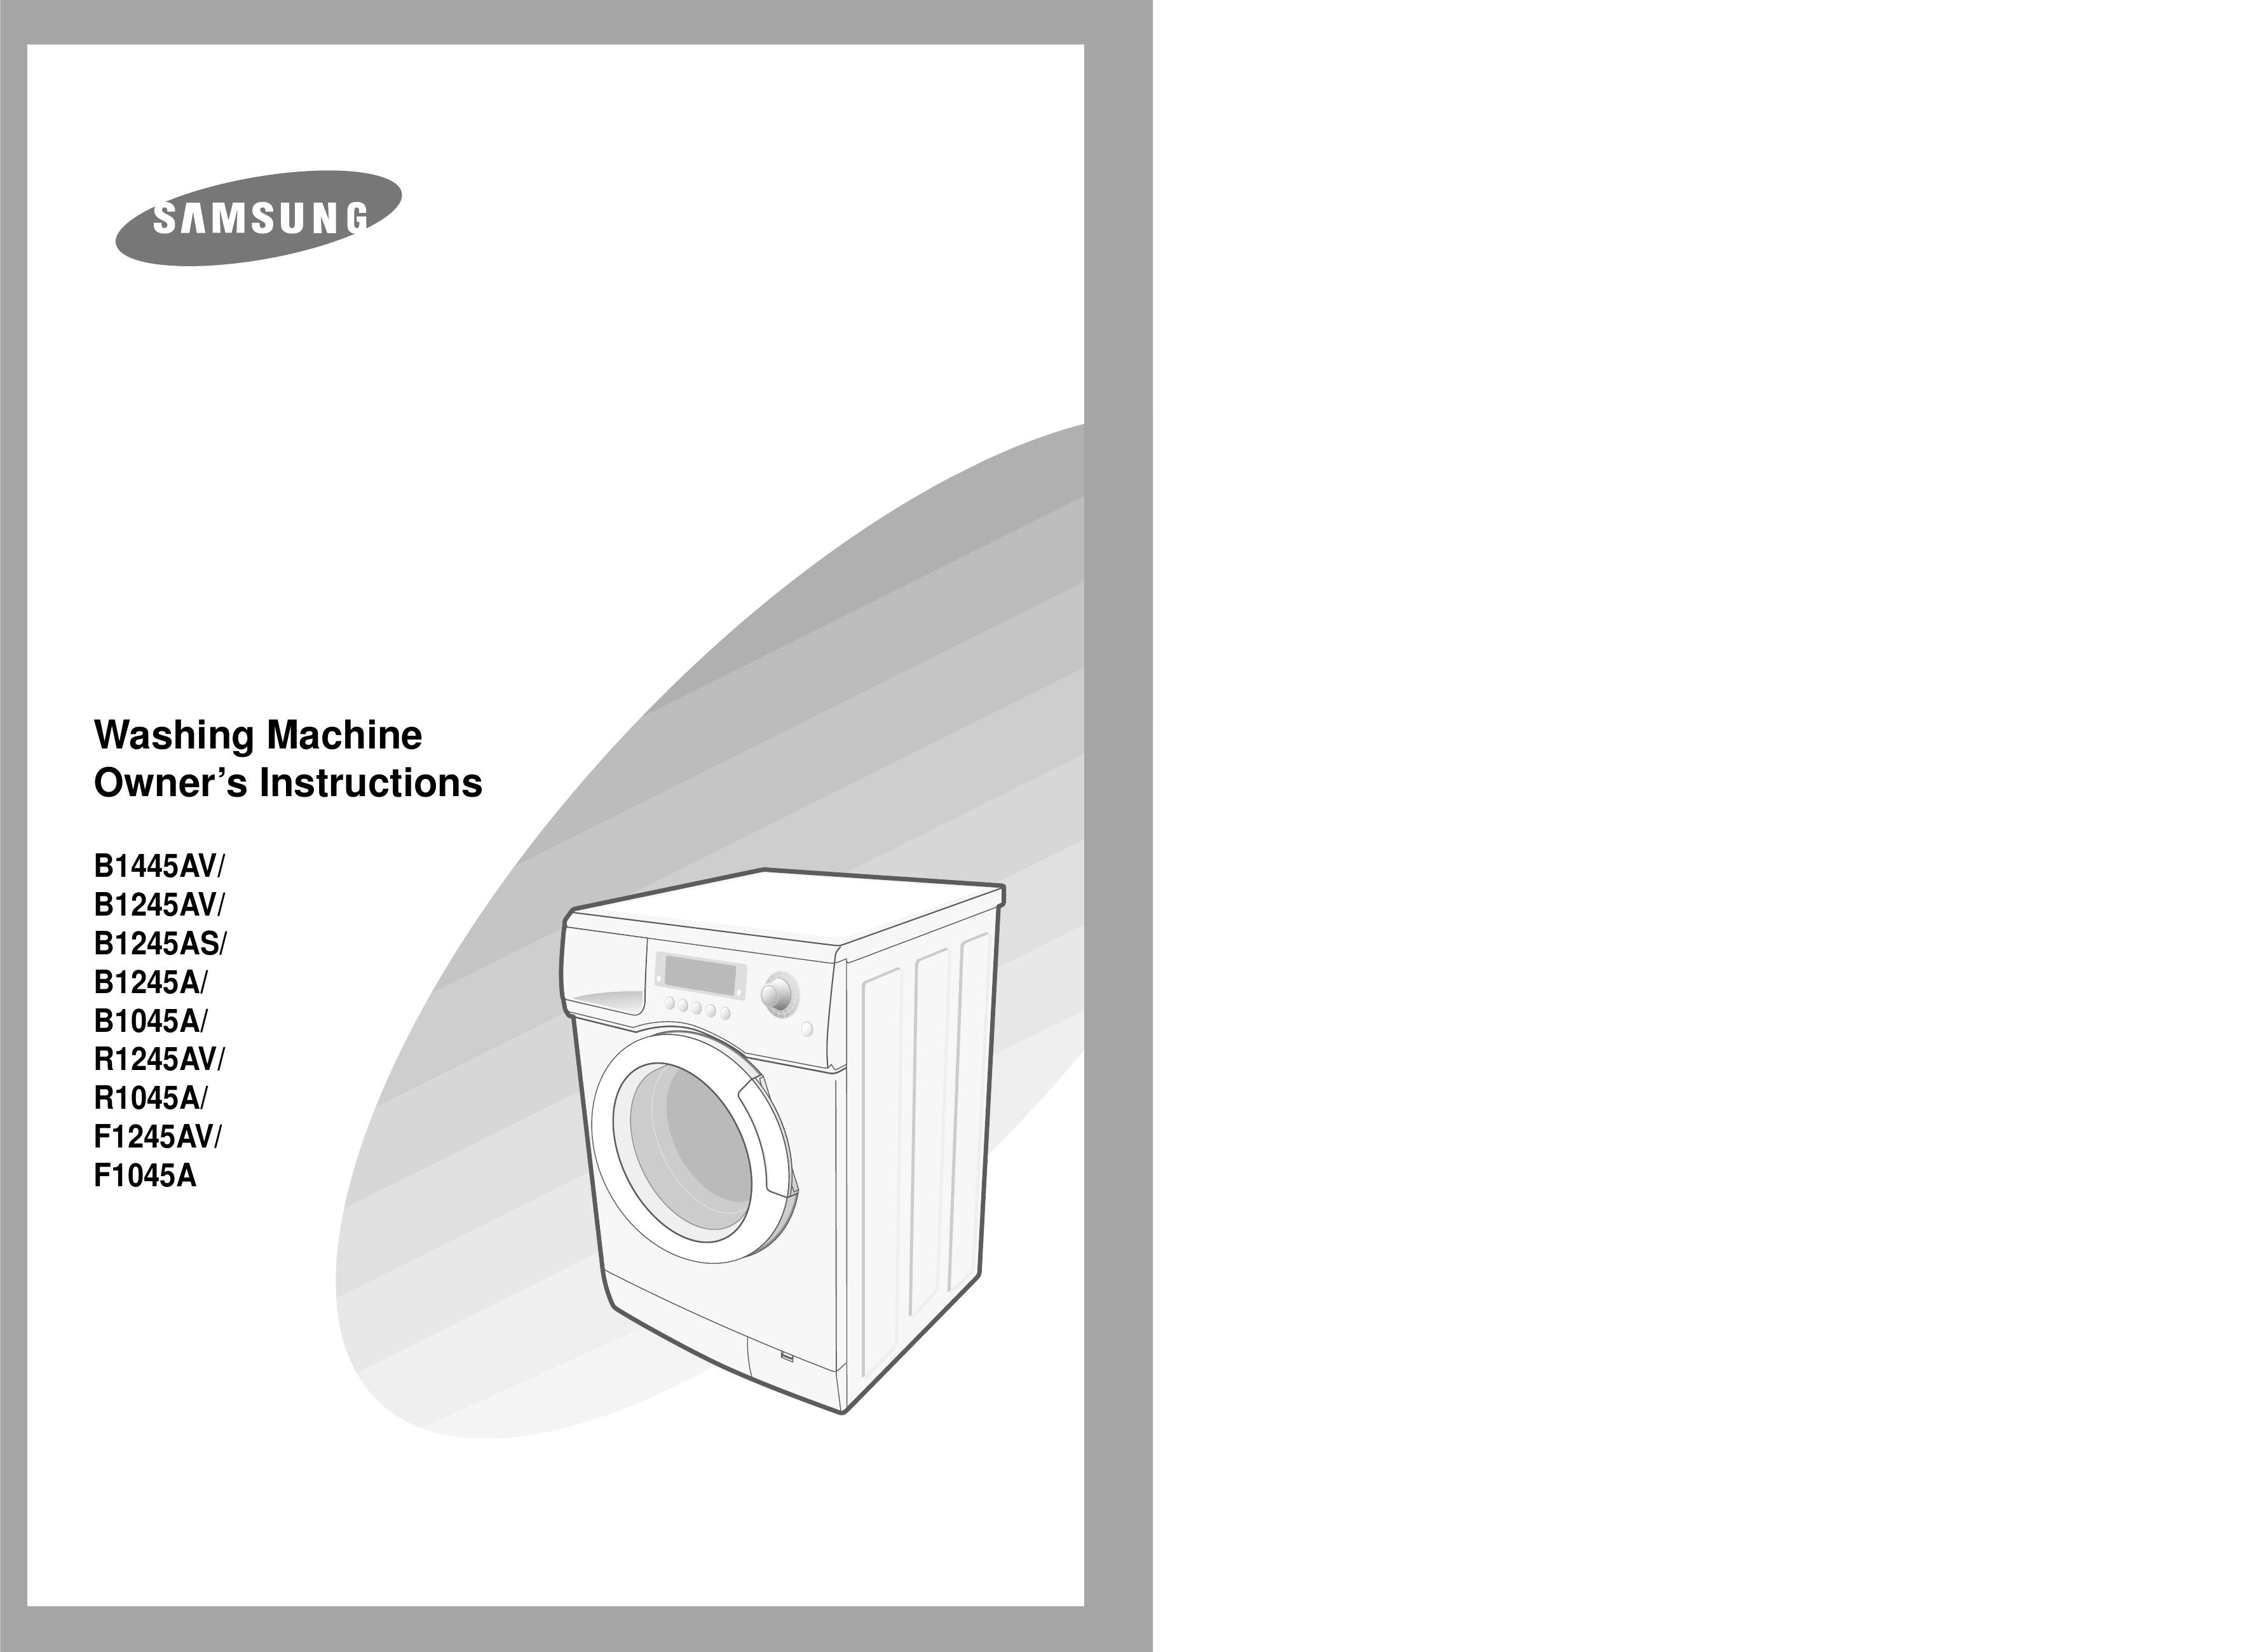 Samsung B1245AS Washer User Manual